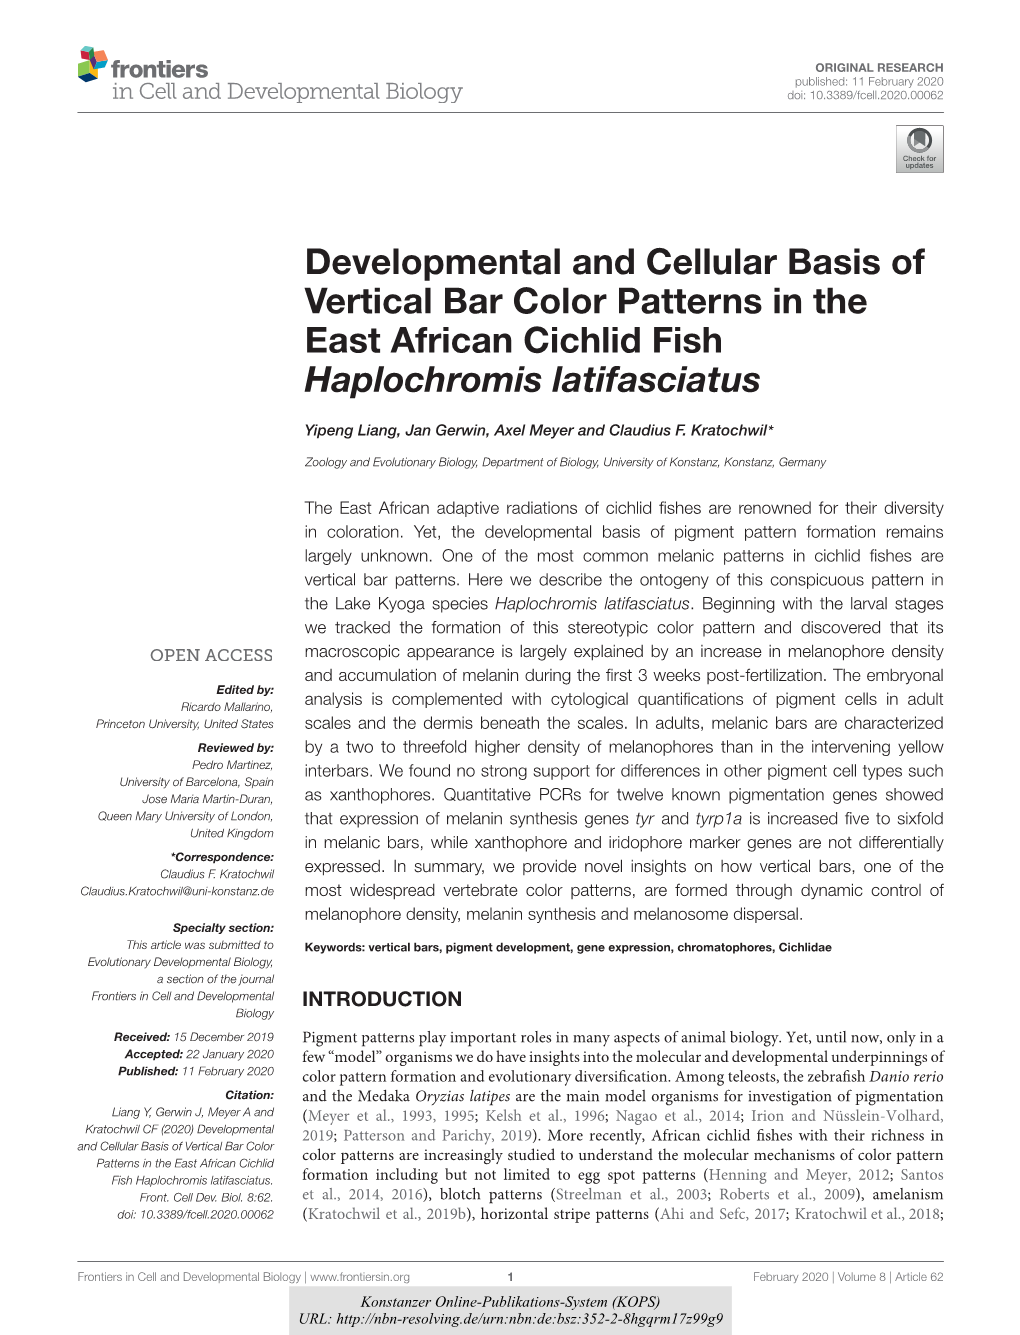 Developmental and Cellular Basis of Vertical Bar Color Patterns in the East African Cichlid Fish Haplochromis Latifasciatus